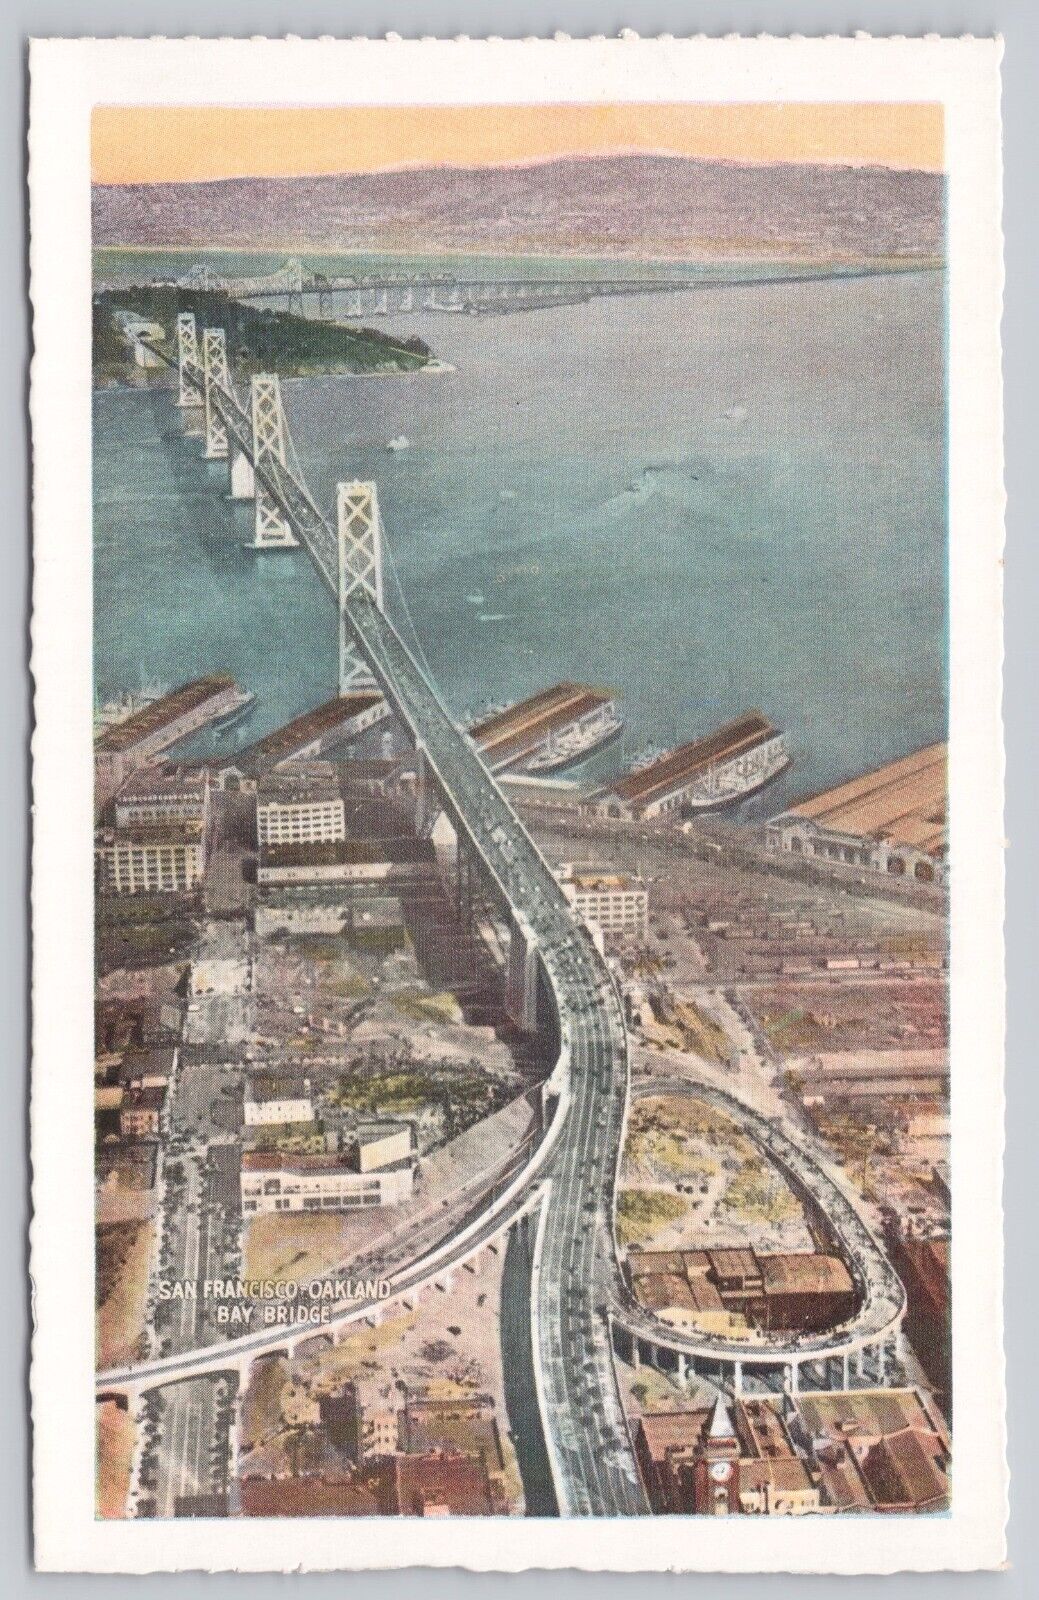 San Francisco California, Oakland Bay Bridge Aerial View, Vintage Postcard